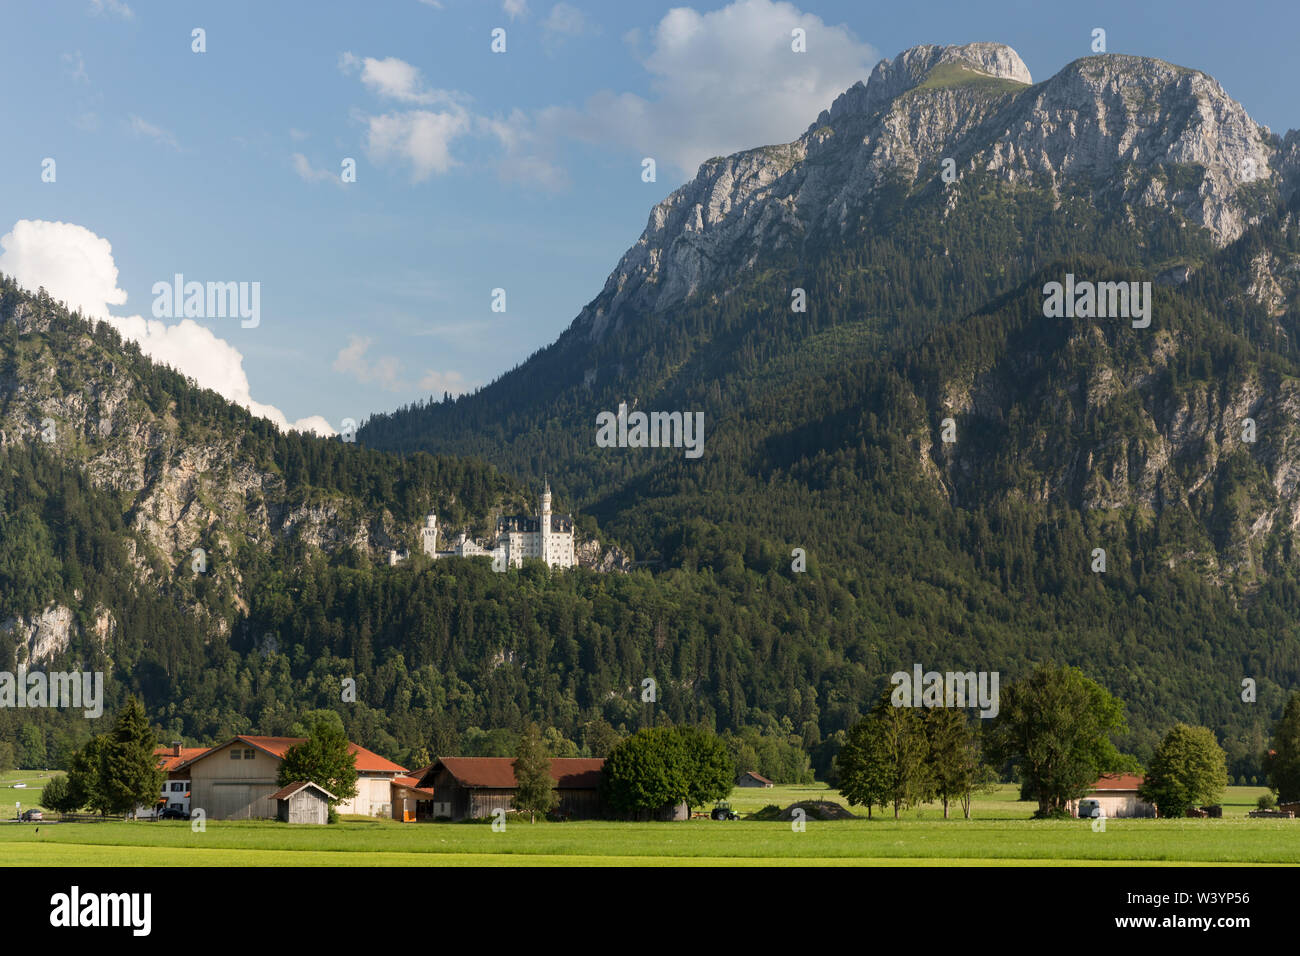 The world famous Neuschwanstein Castle in Bavaria, Germany Stock Photo